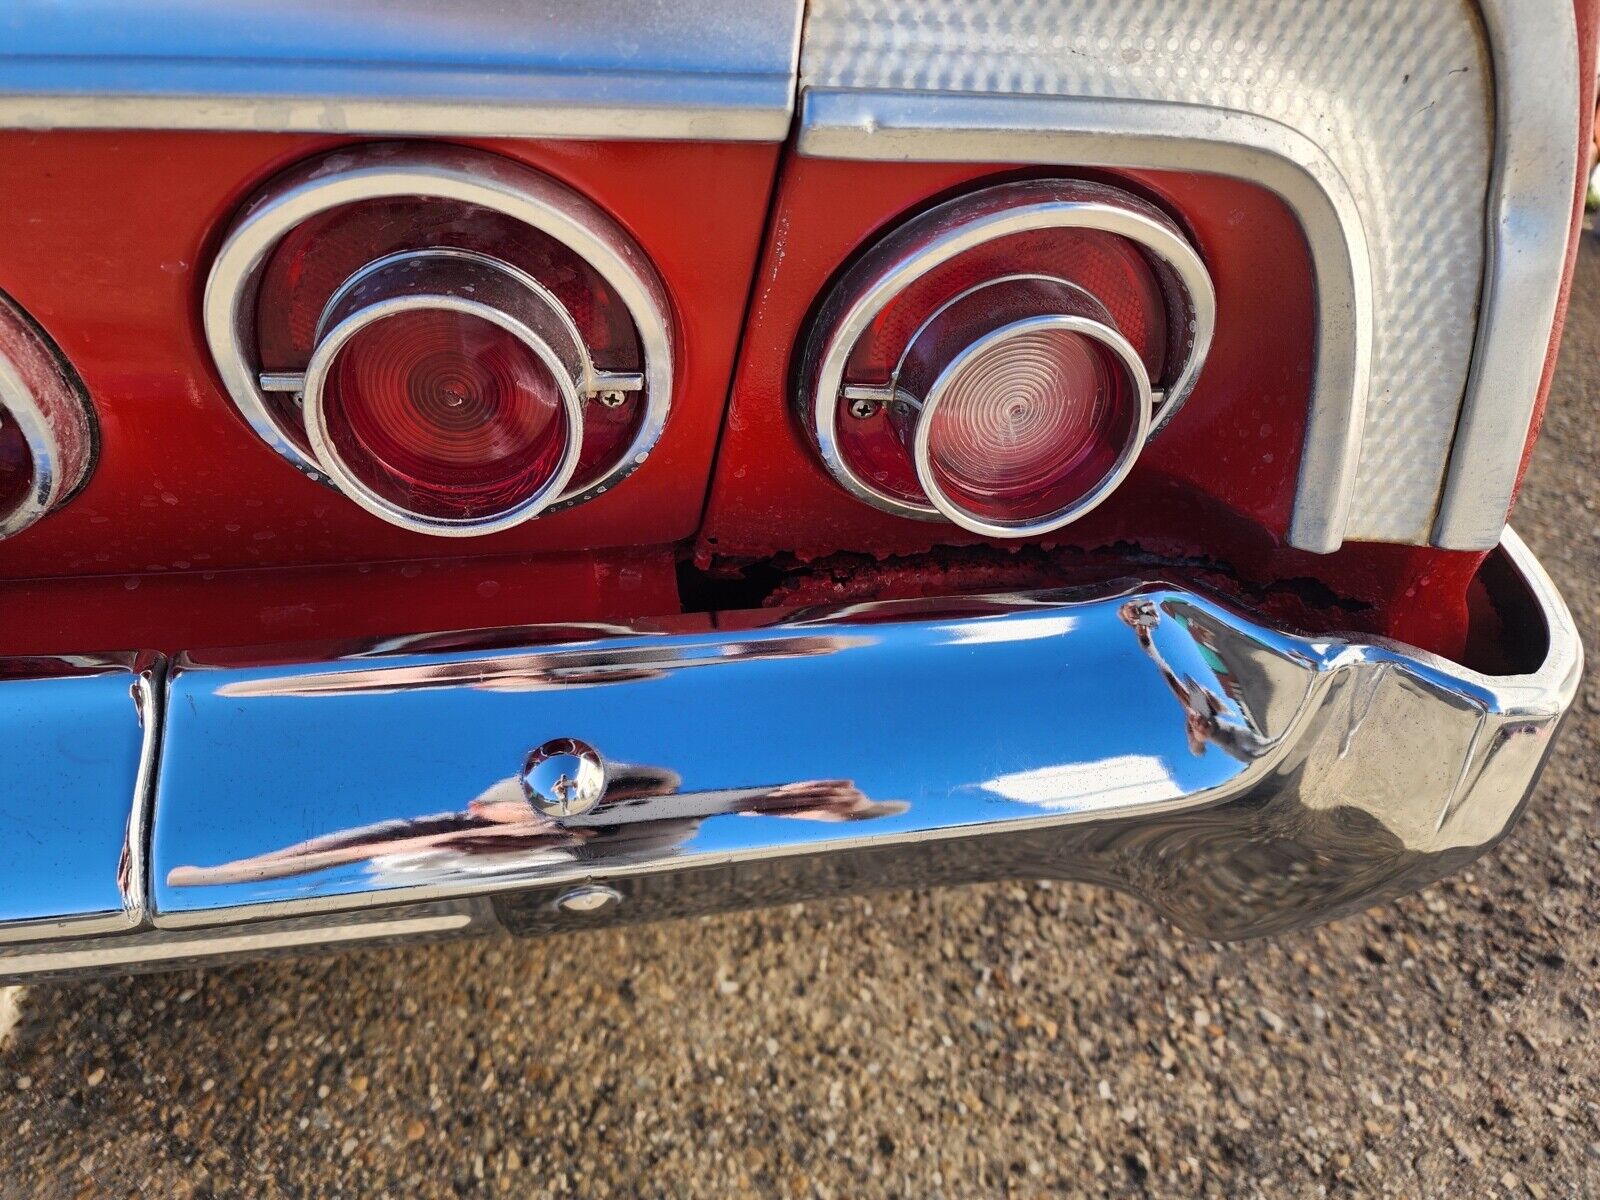 1964 Impala SS Restoration: Engine Options and Pricing Considerations